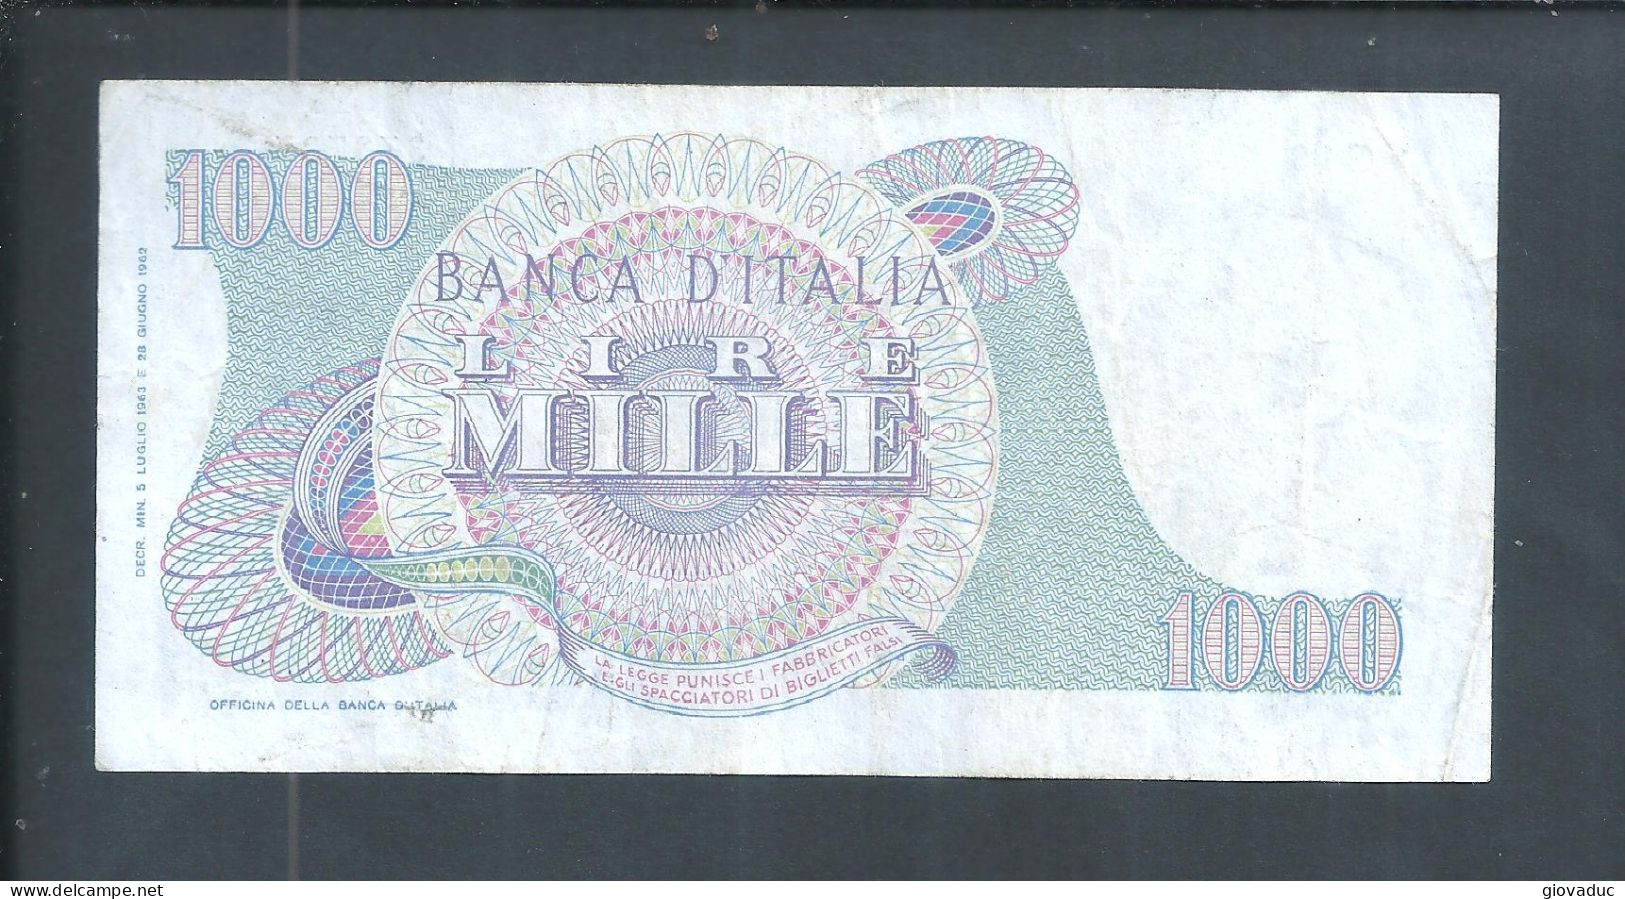 Banconota Italia 1000 Lire 28 Giugno 1962 - Rarita Unica N° C18 - 373737 - Filigrana - Vedi Foto Firme Carli-Ripa - - [ 7] Fouten & Varianten